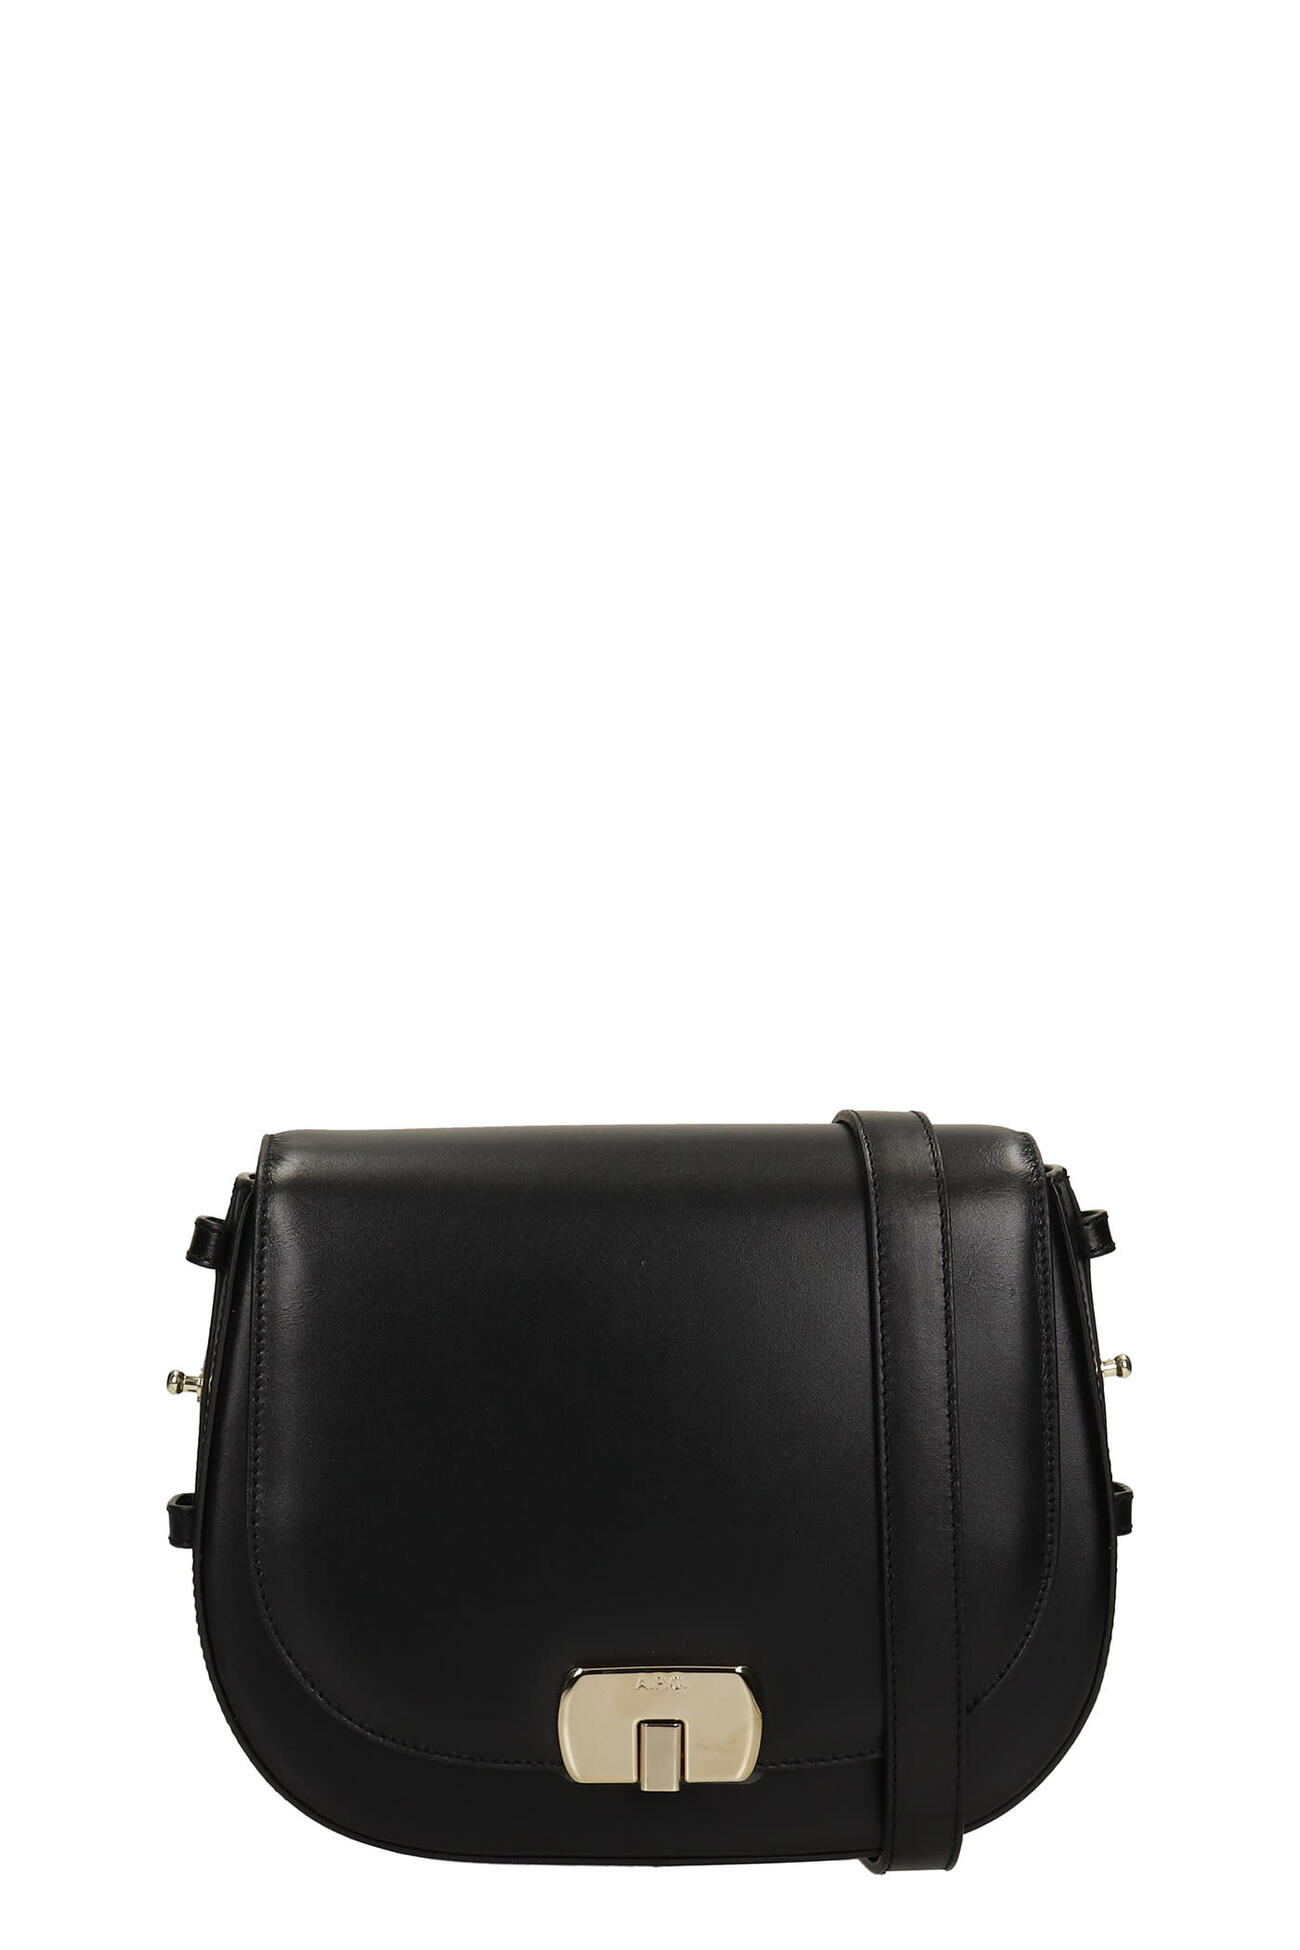 A.P.C. A.P.C. Eva Shoulder Bag In Black Leather in nero